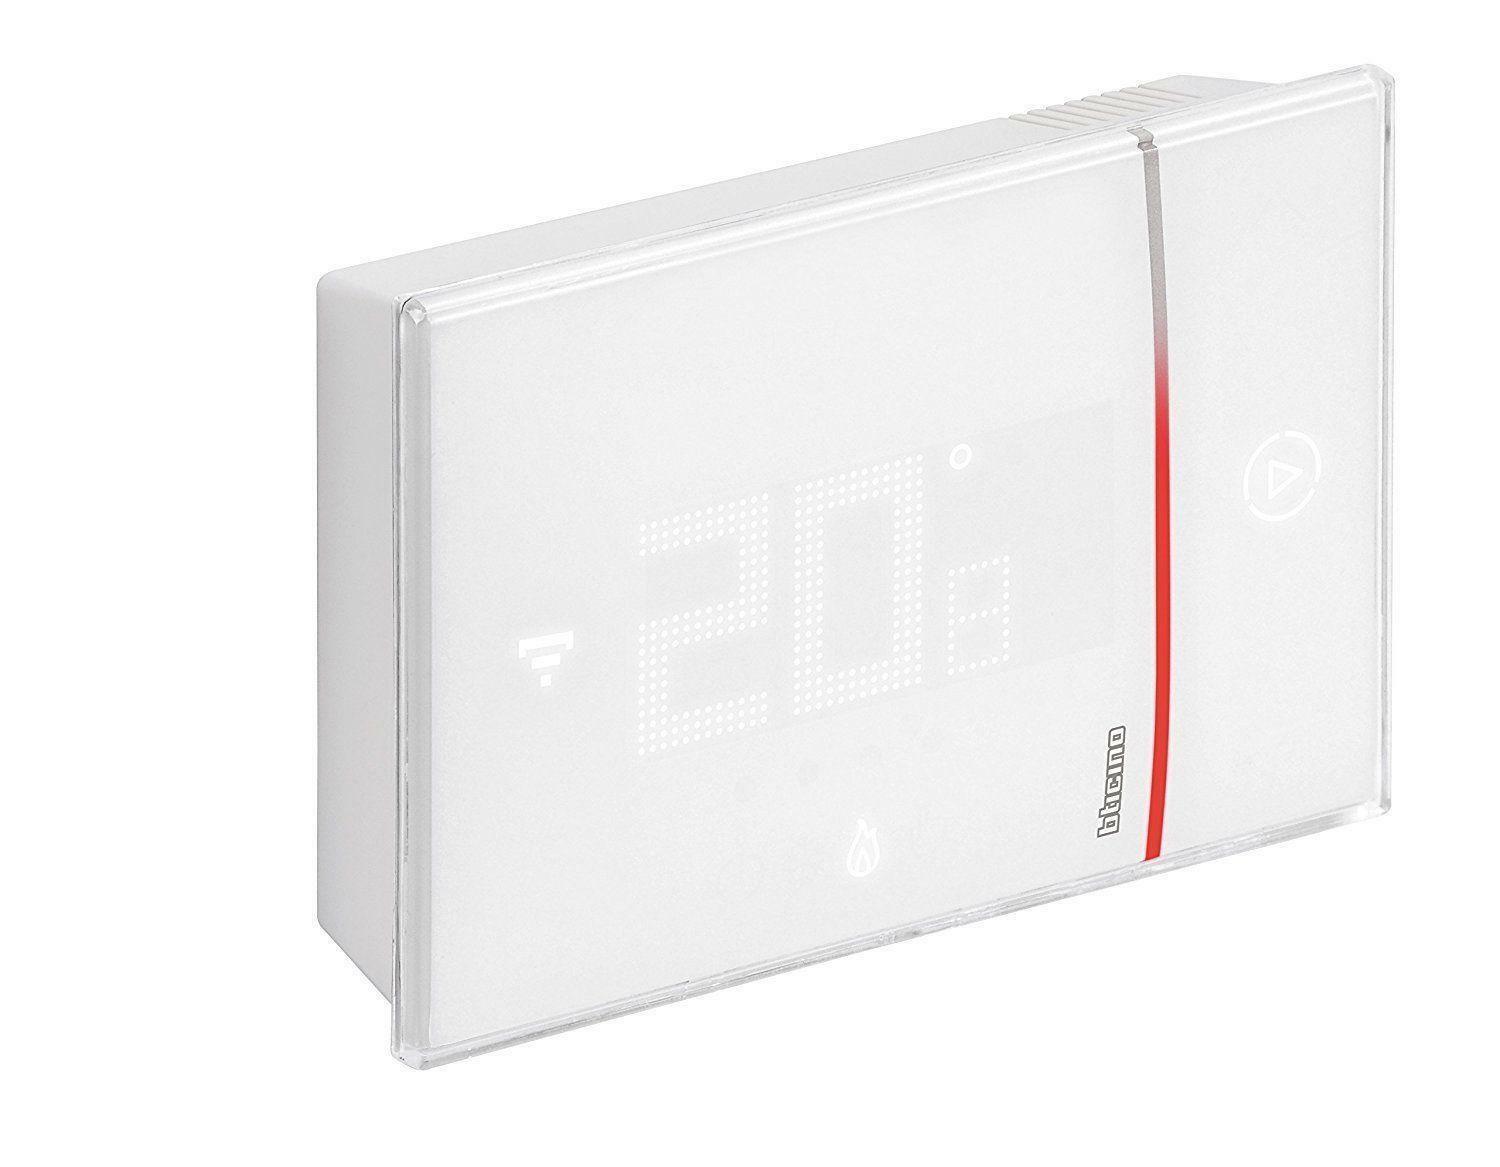 bticino bticino termostato wifi da incasso serie eliot x8000